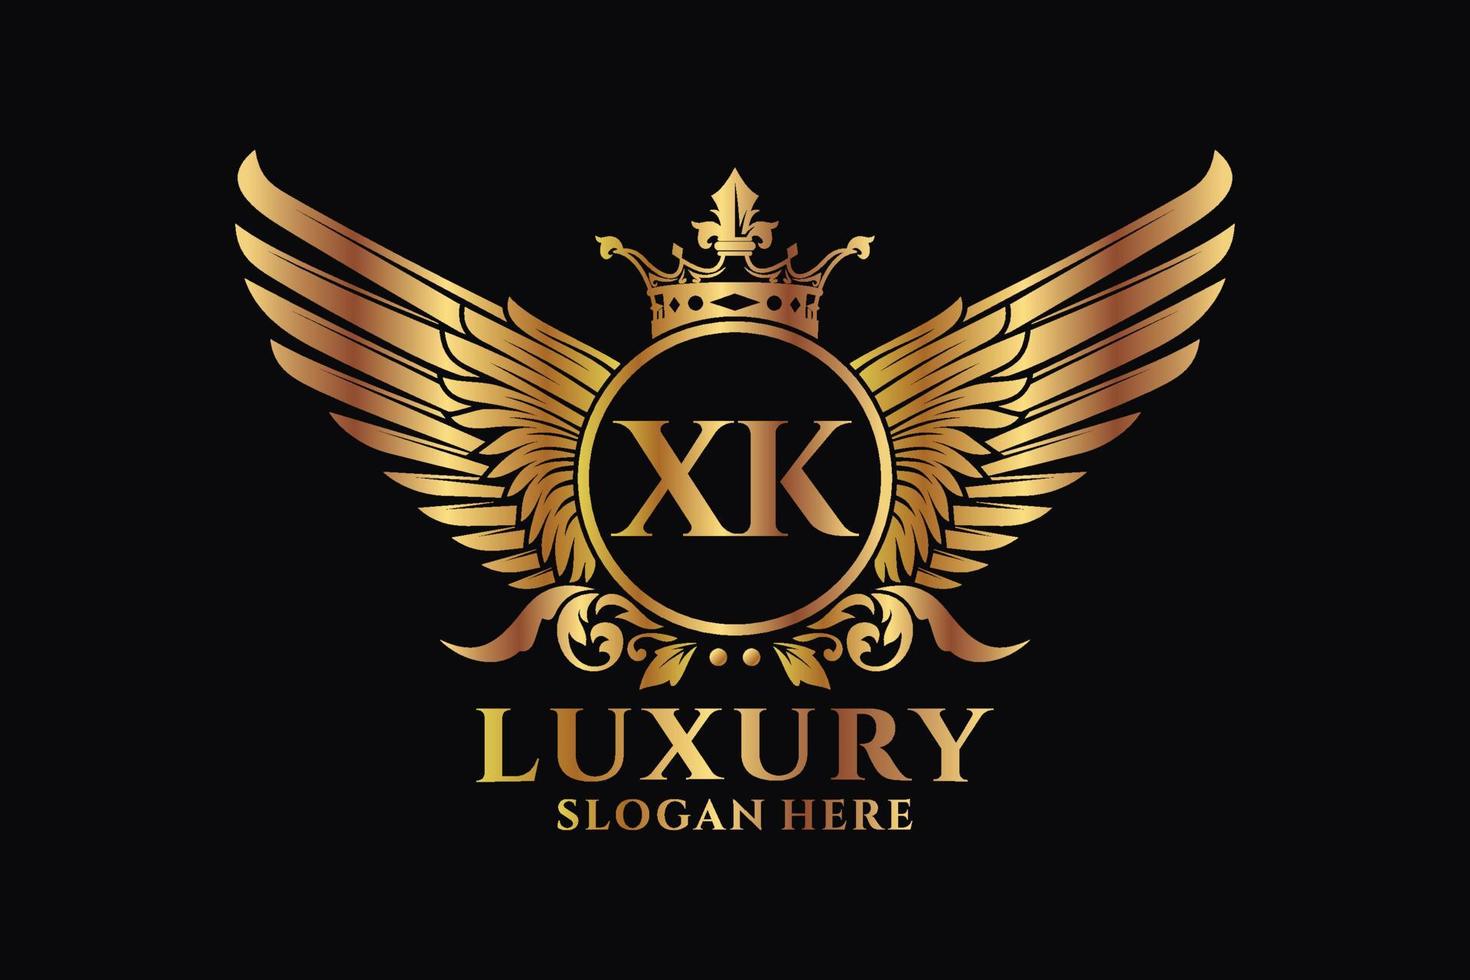 luxe Koninklijk vleugel brief xk kam goud kleur logo vector, zege logo, kam logo, vleugel logo, vector logo sjabloon.